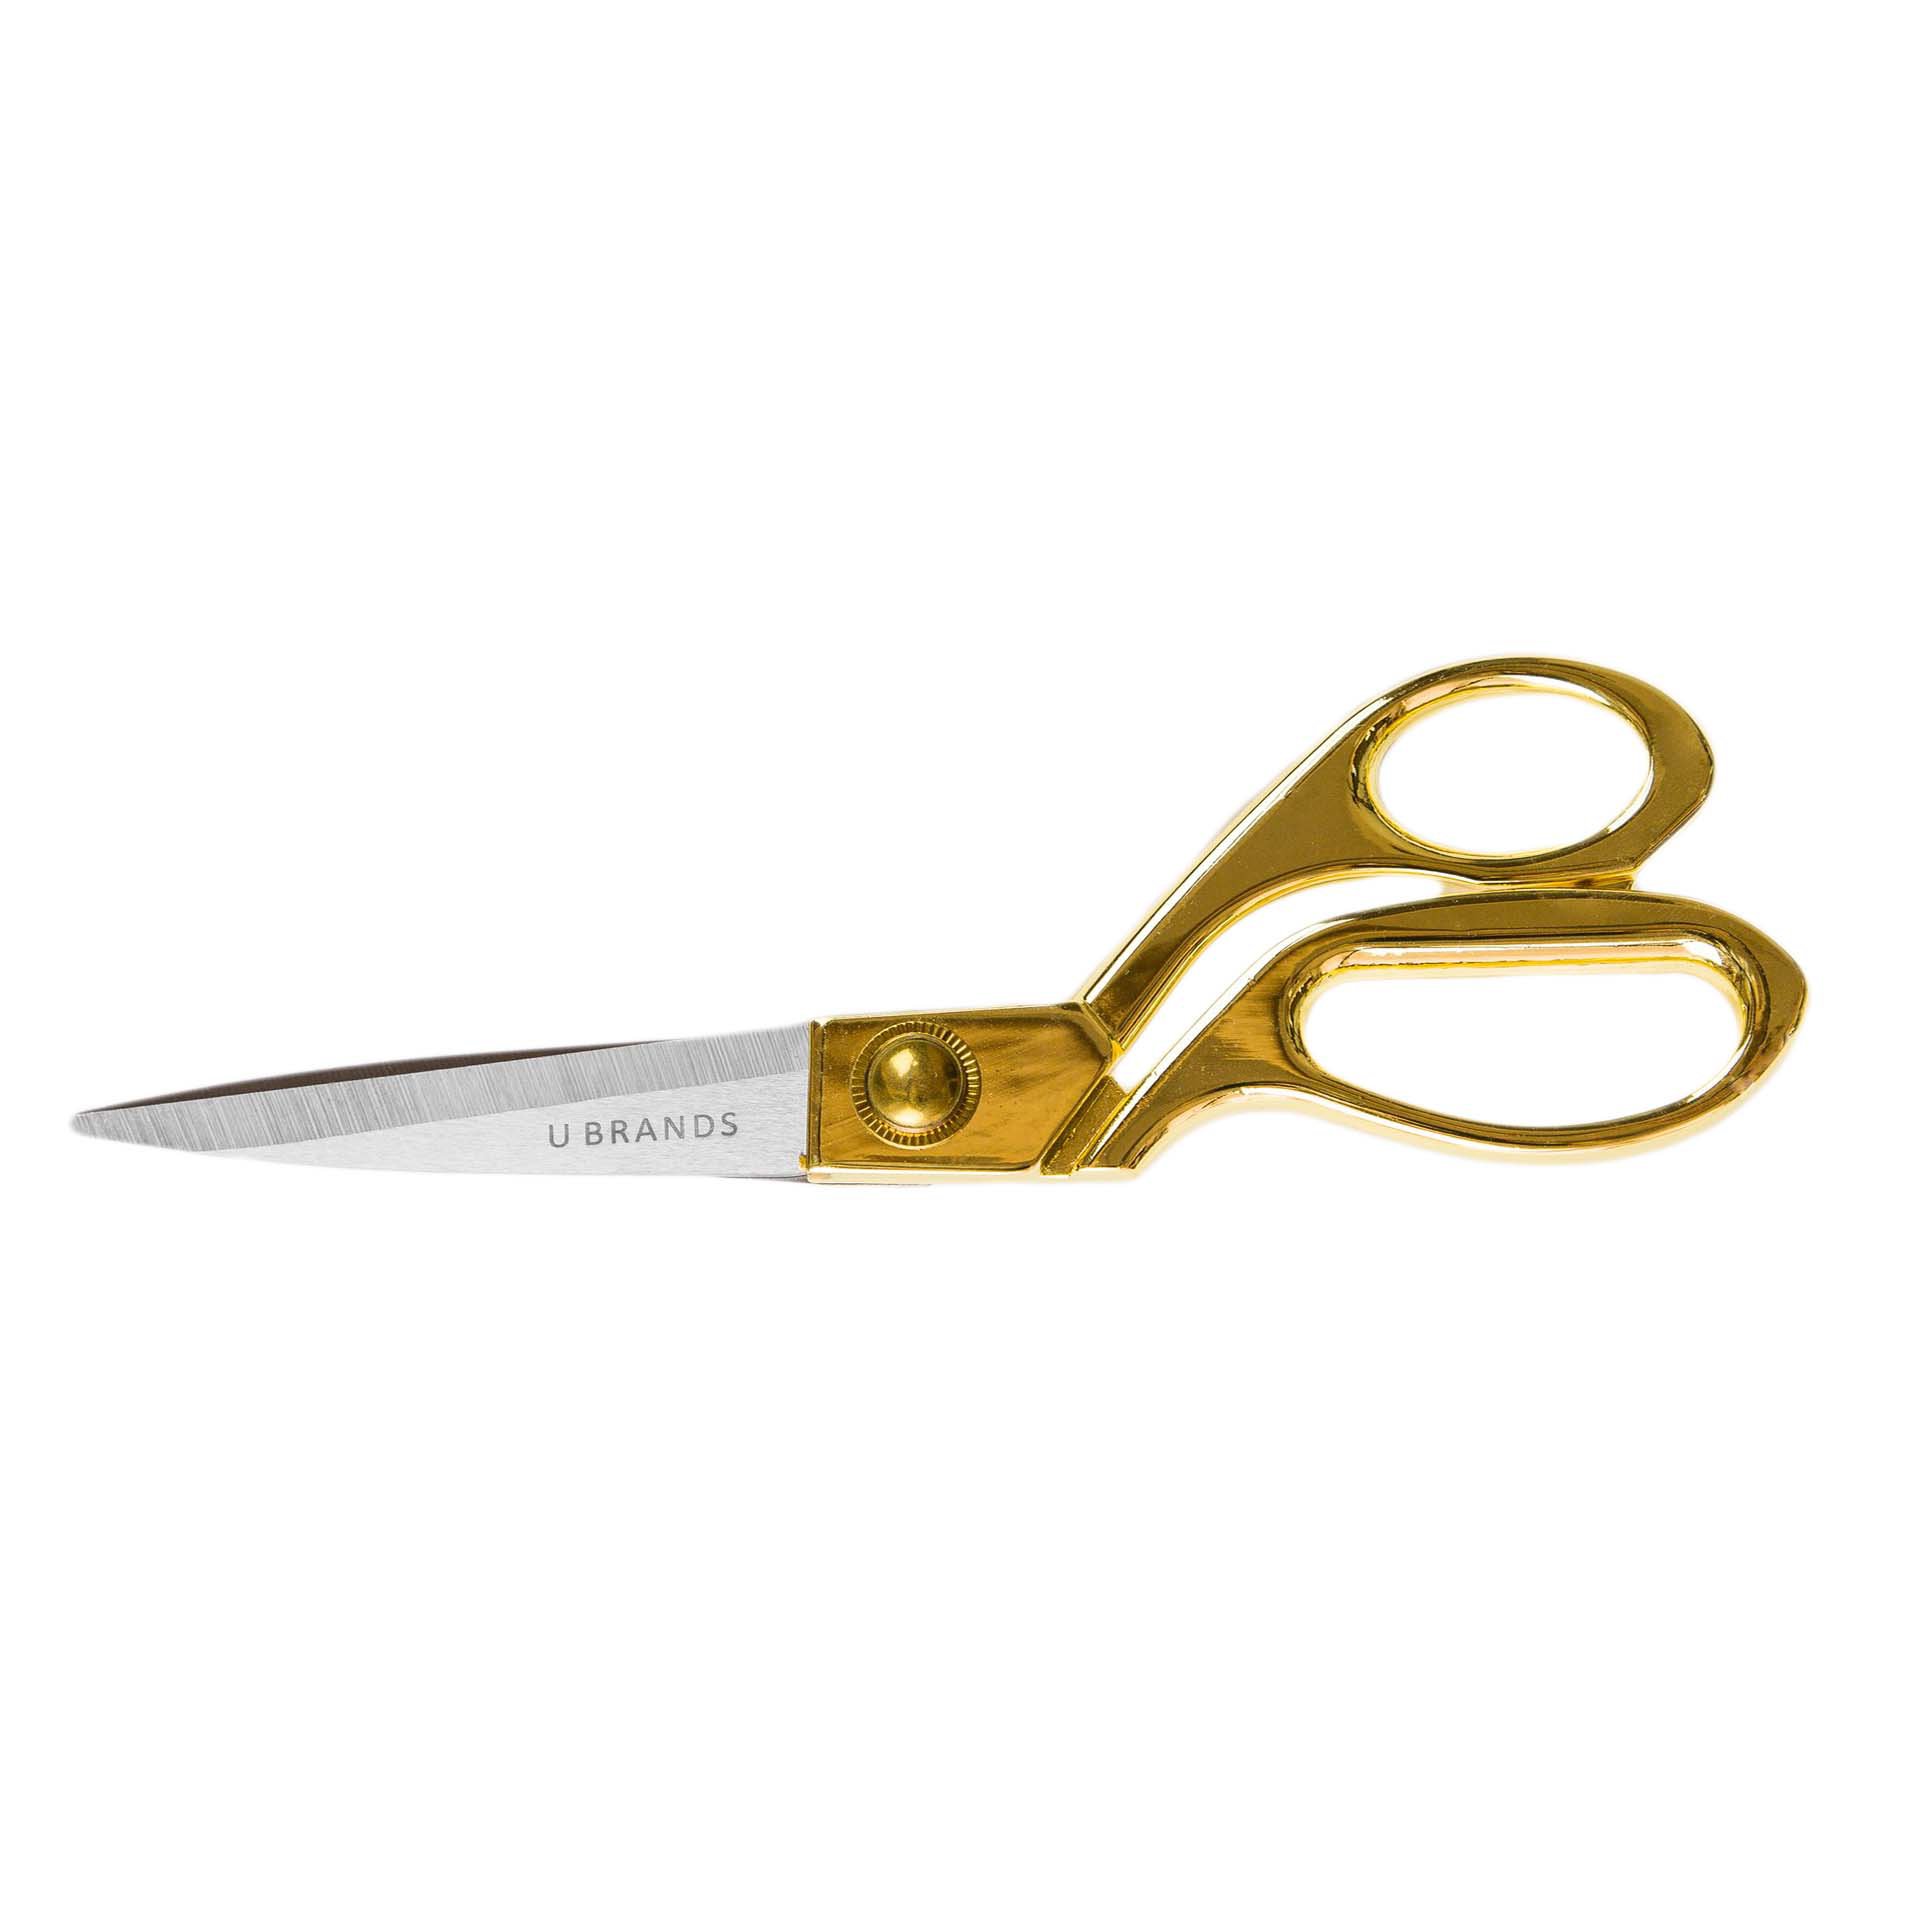 U Brands Gold Finish Scissors - Shop Tools & Equipment at H-E-B